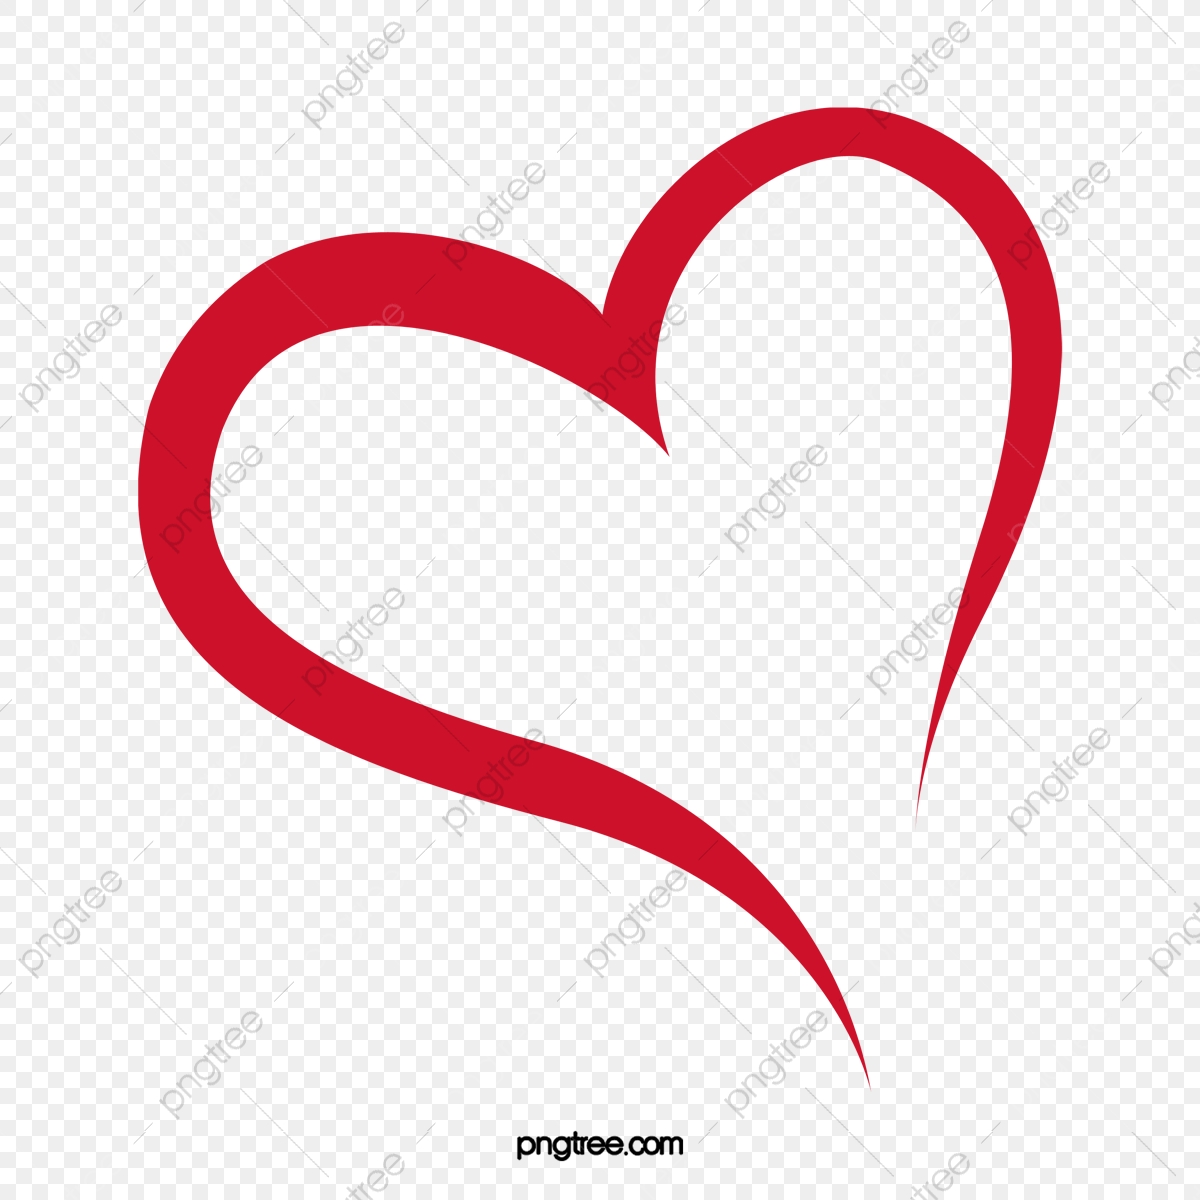 Heart Logo PNG - 180844